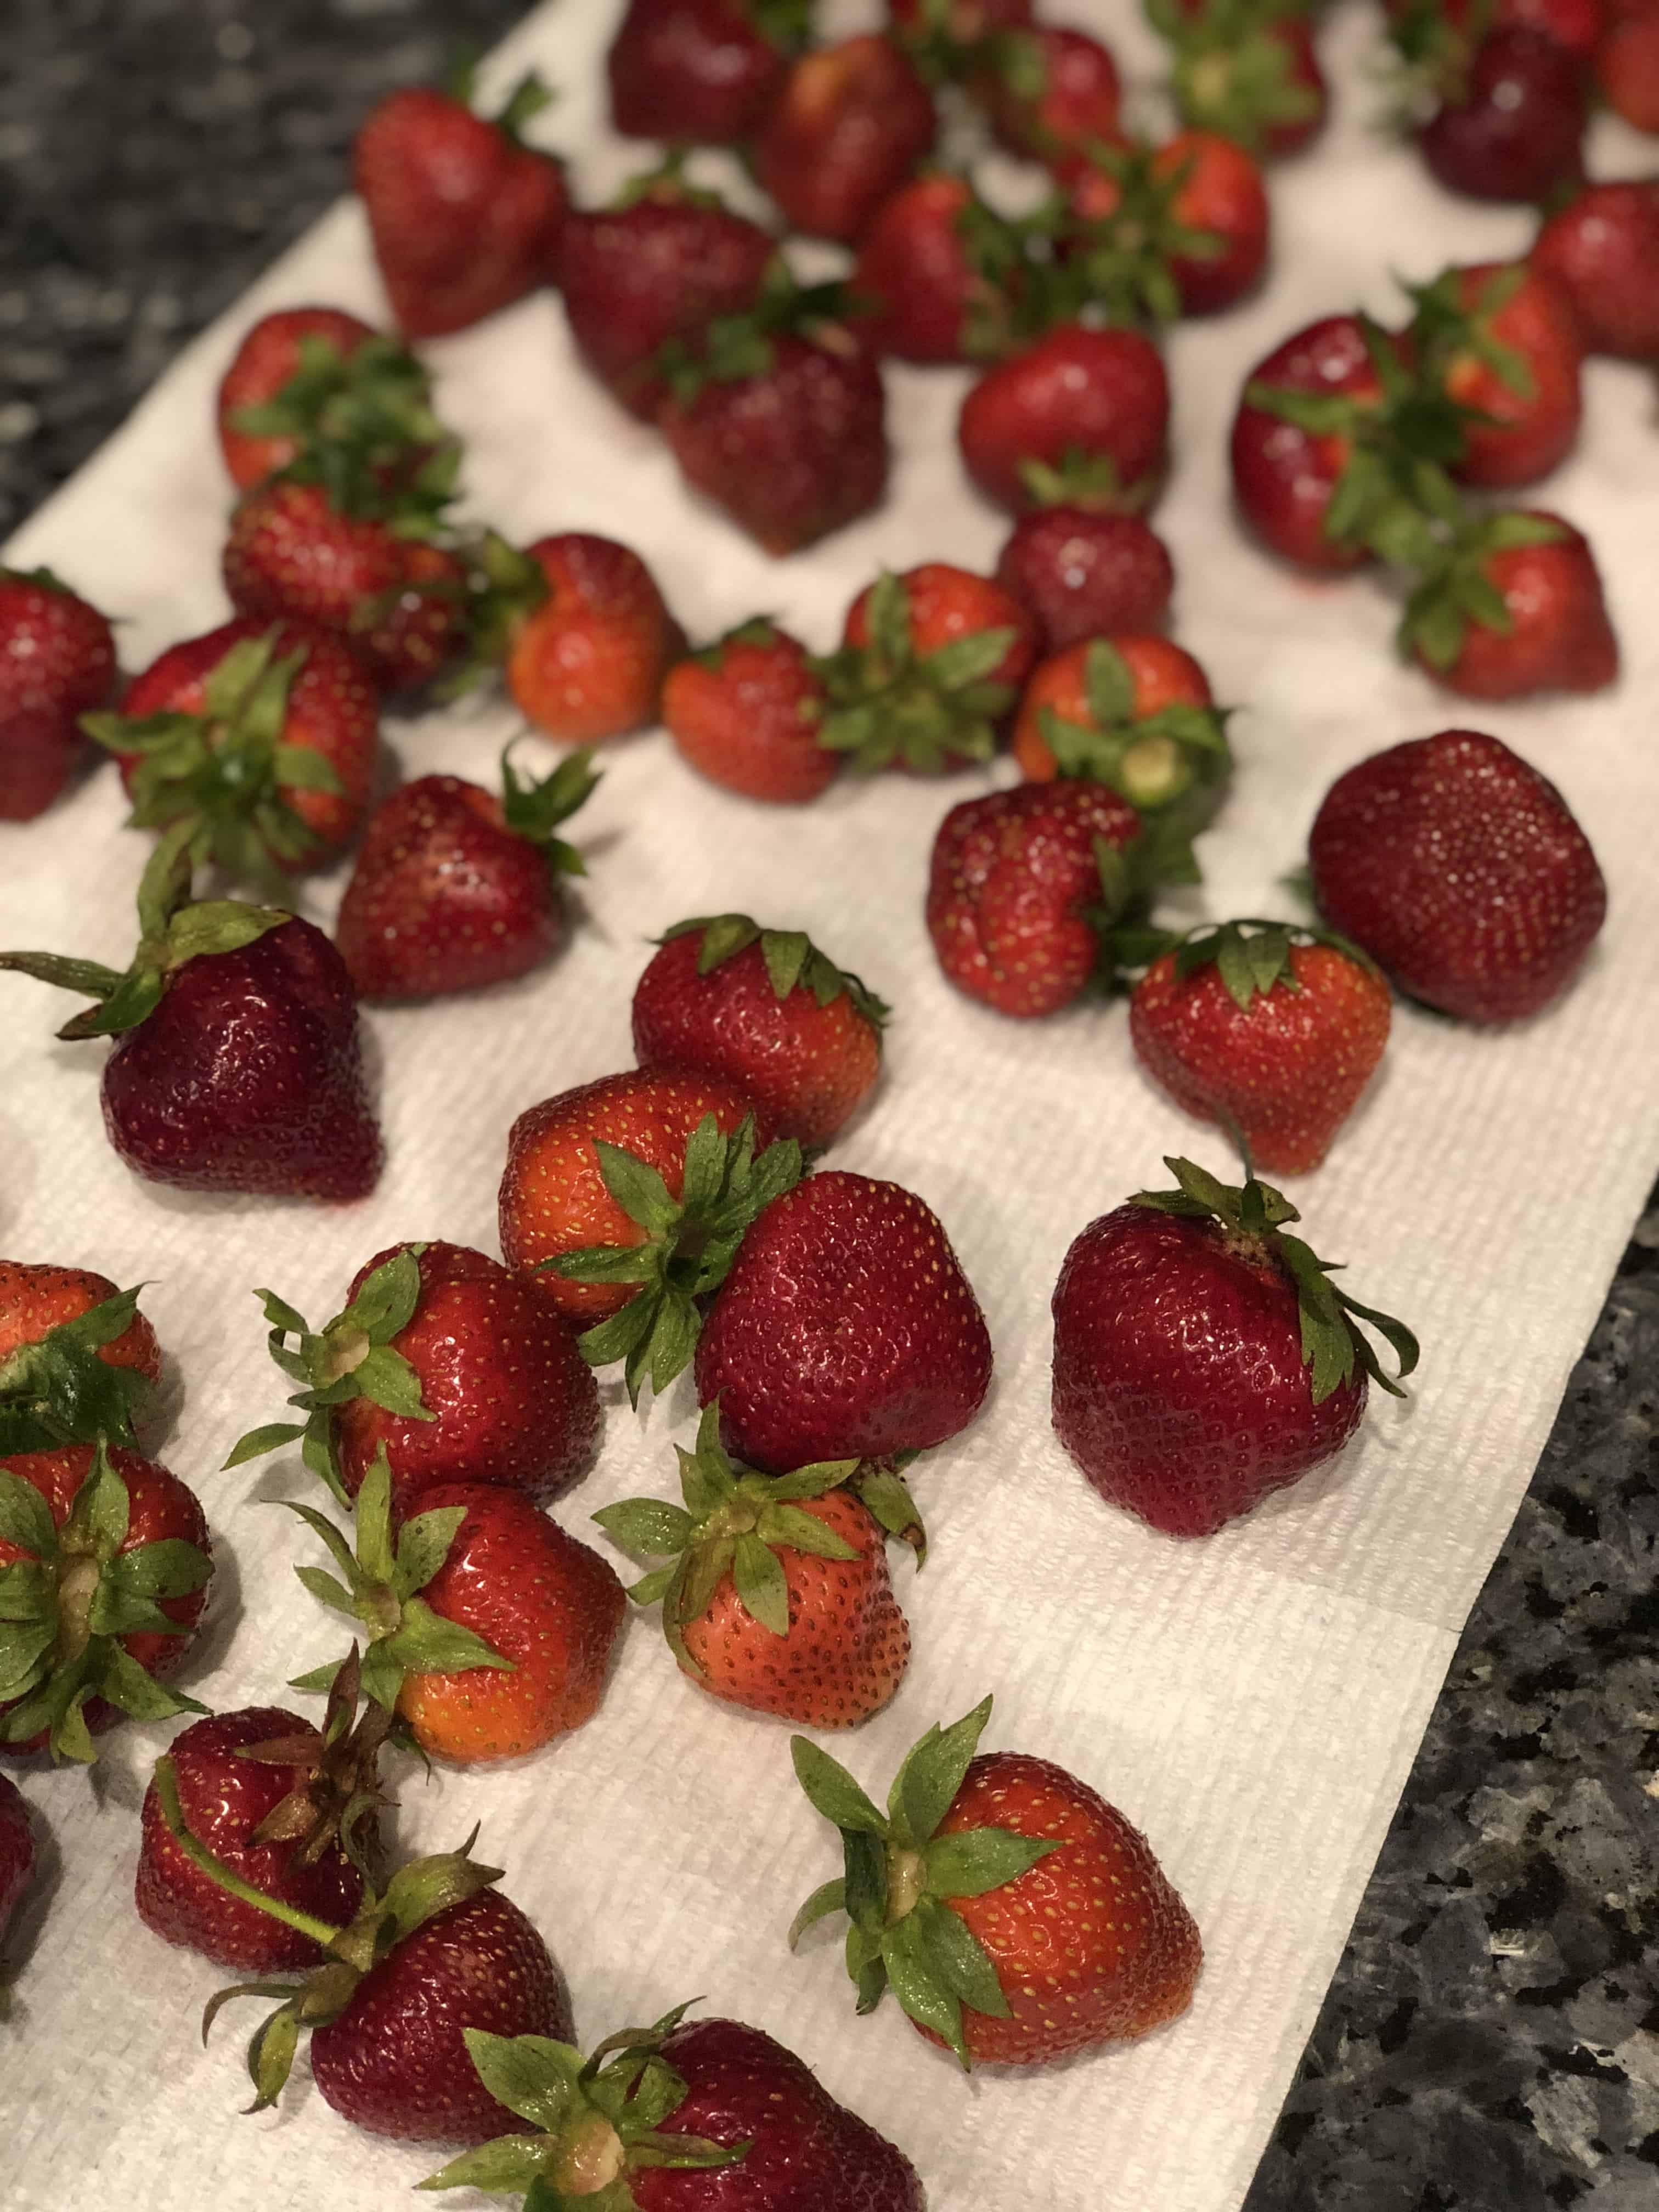 Dry all moisture off strawberries to keep strawberries fresh